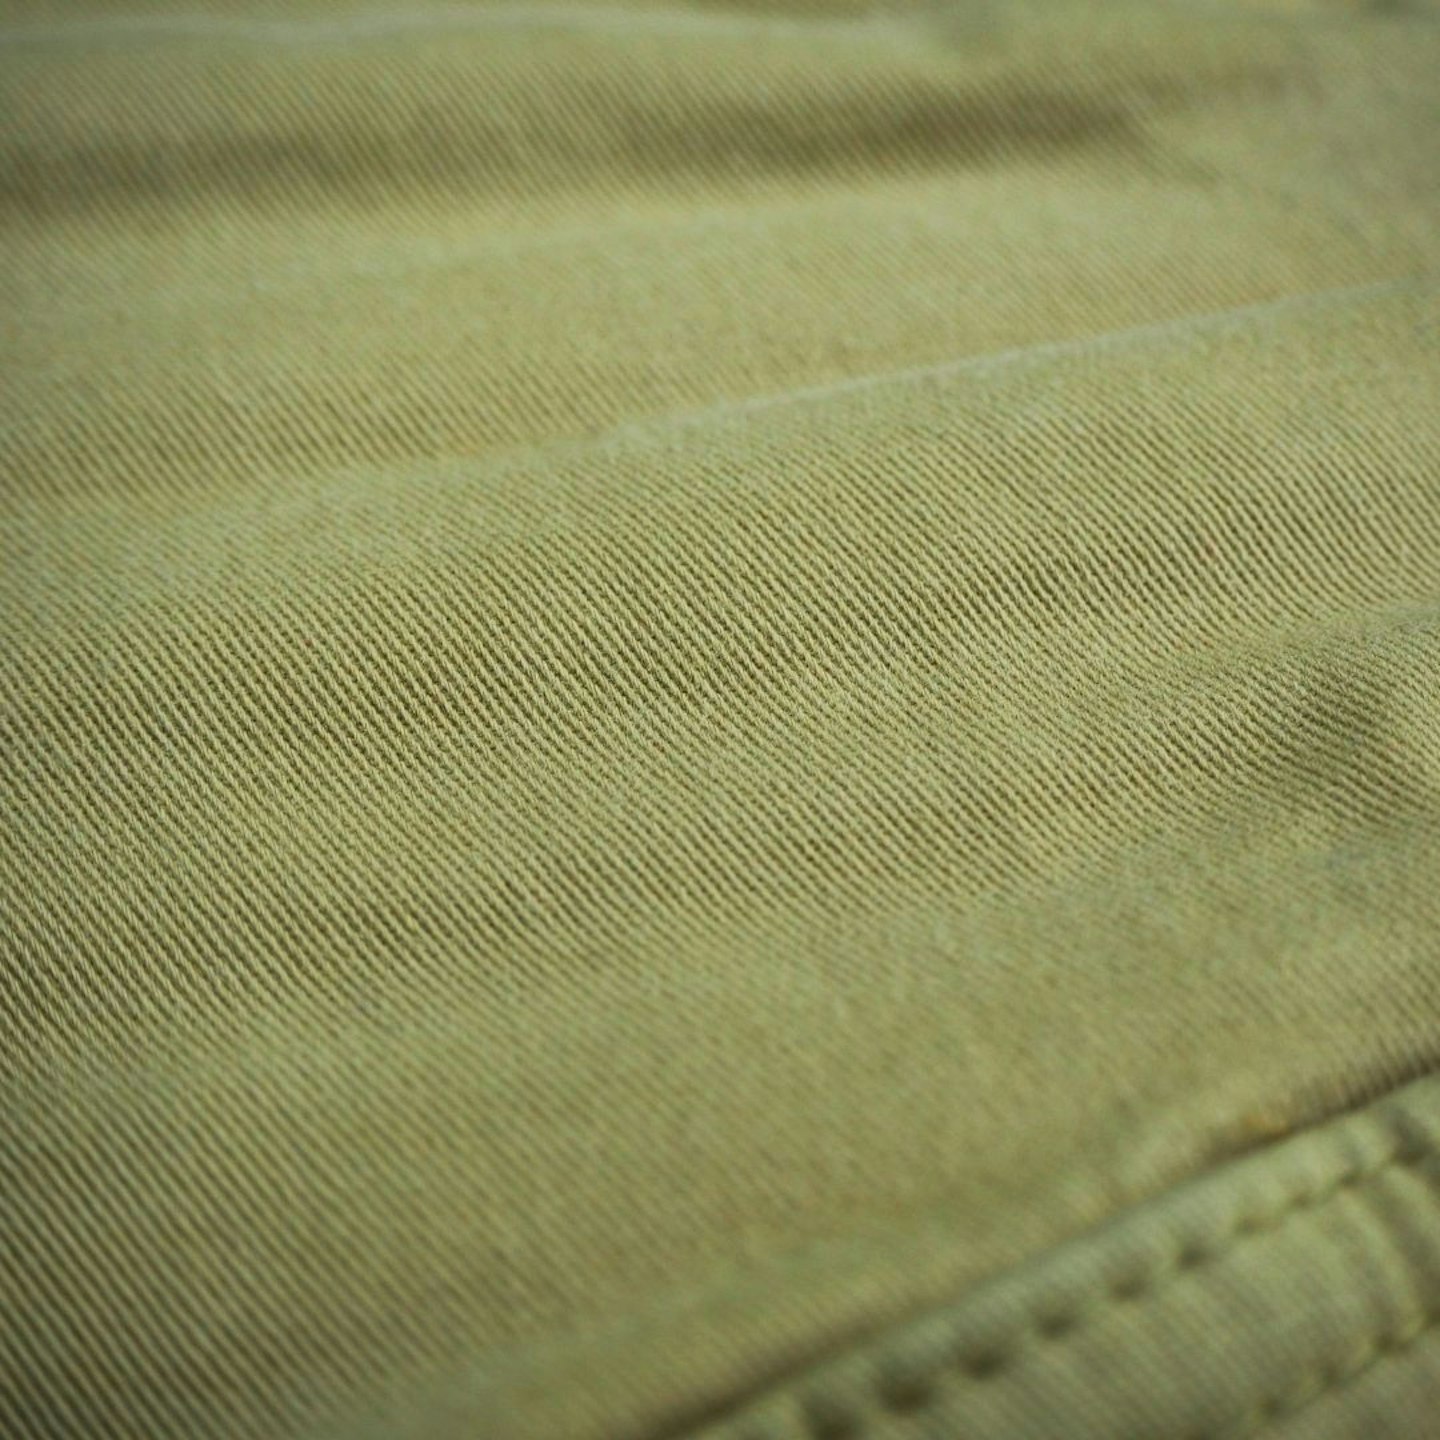 Macro shot of BAM Leam Organic Cotton Cargo Shorts fabric